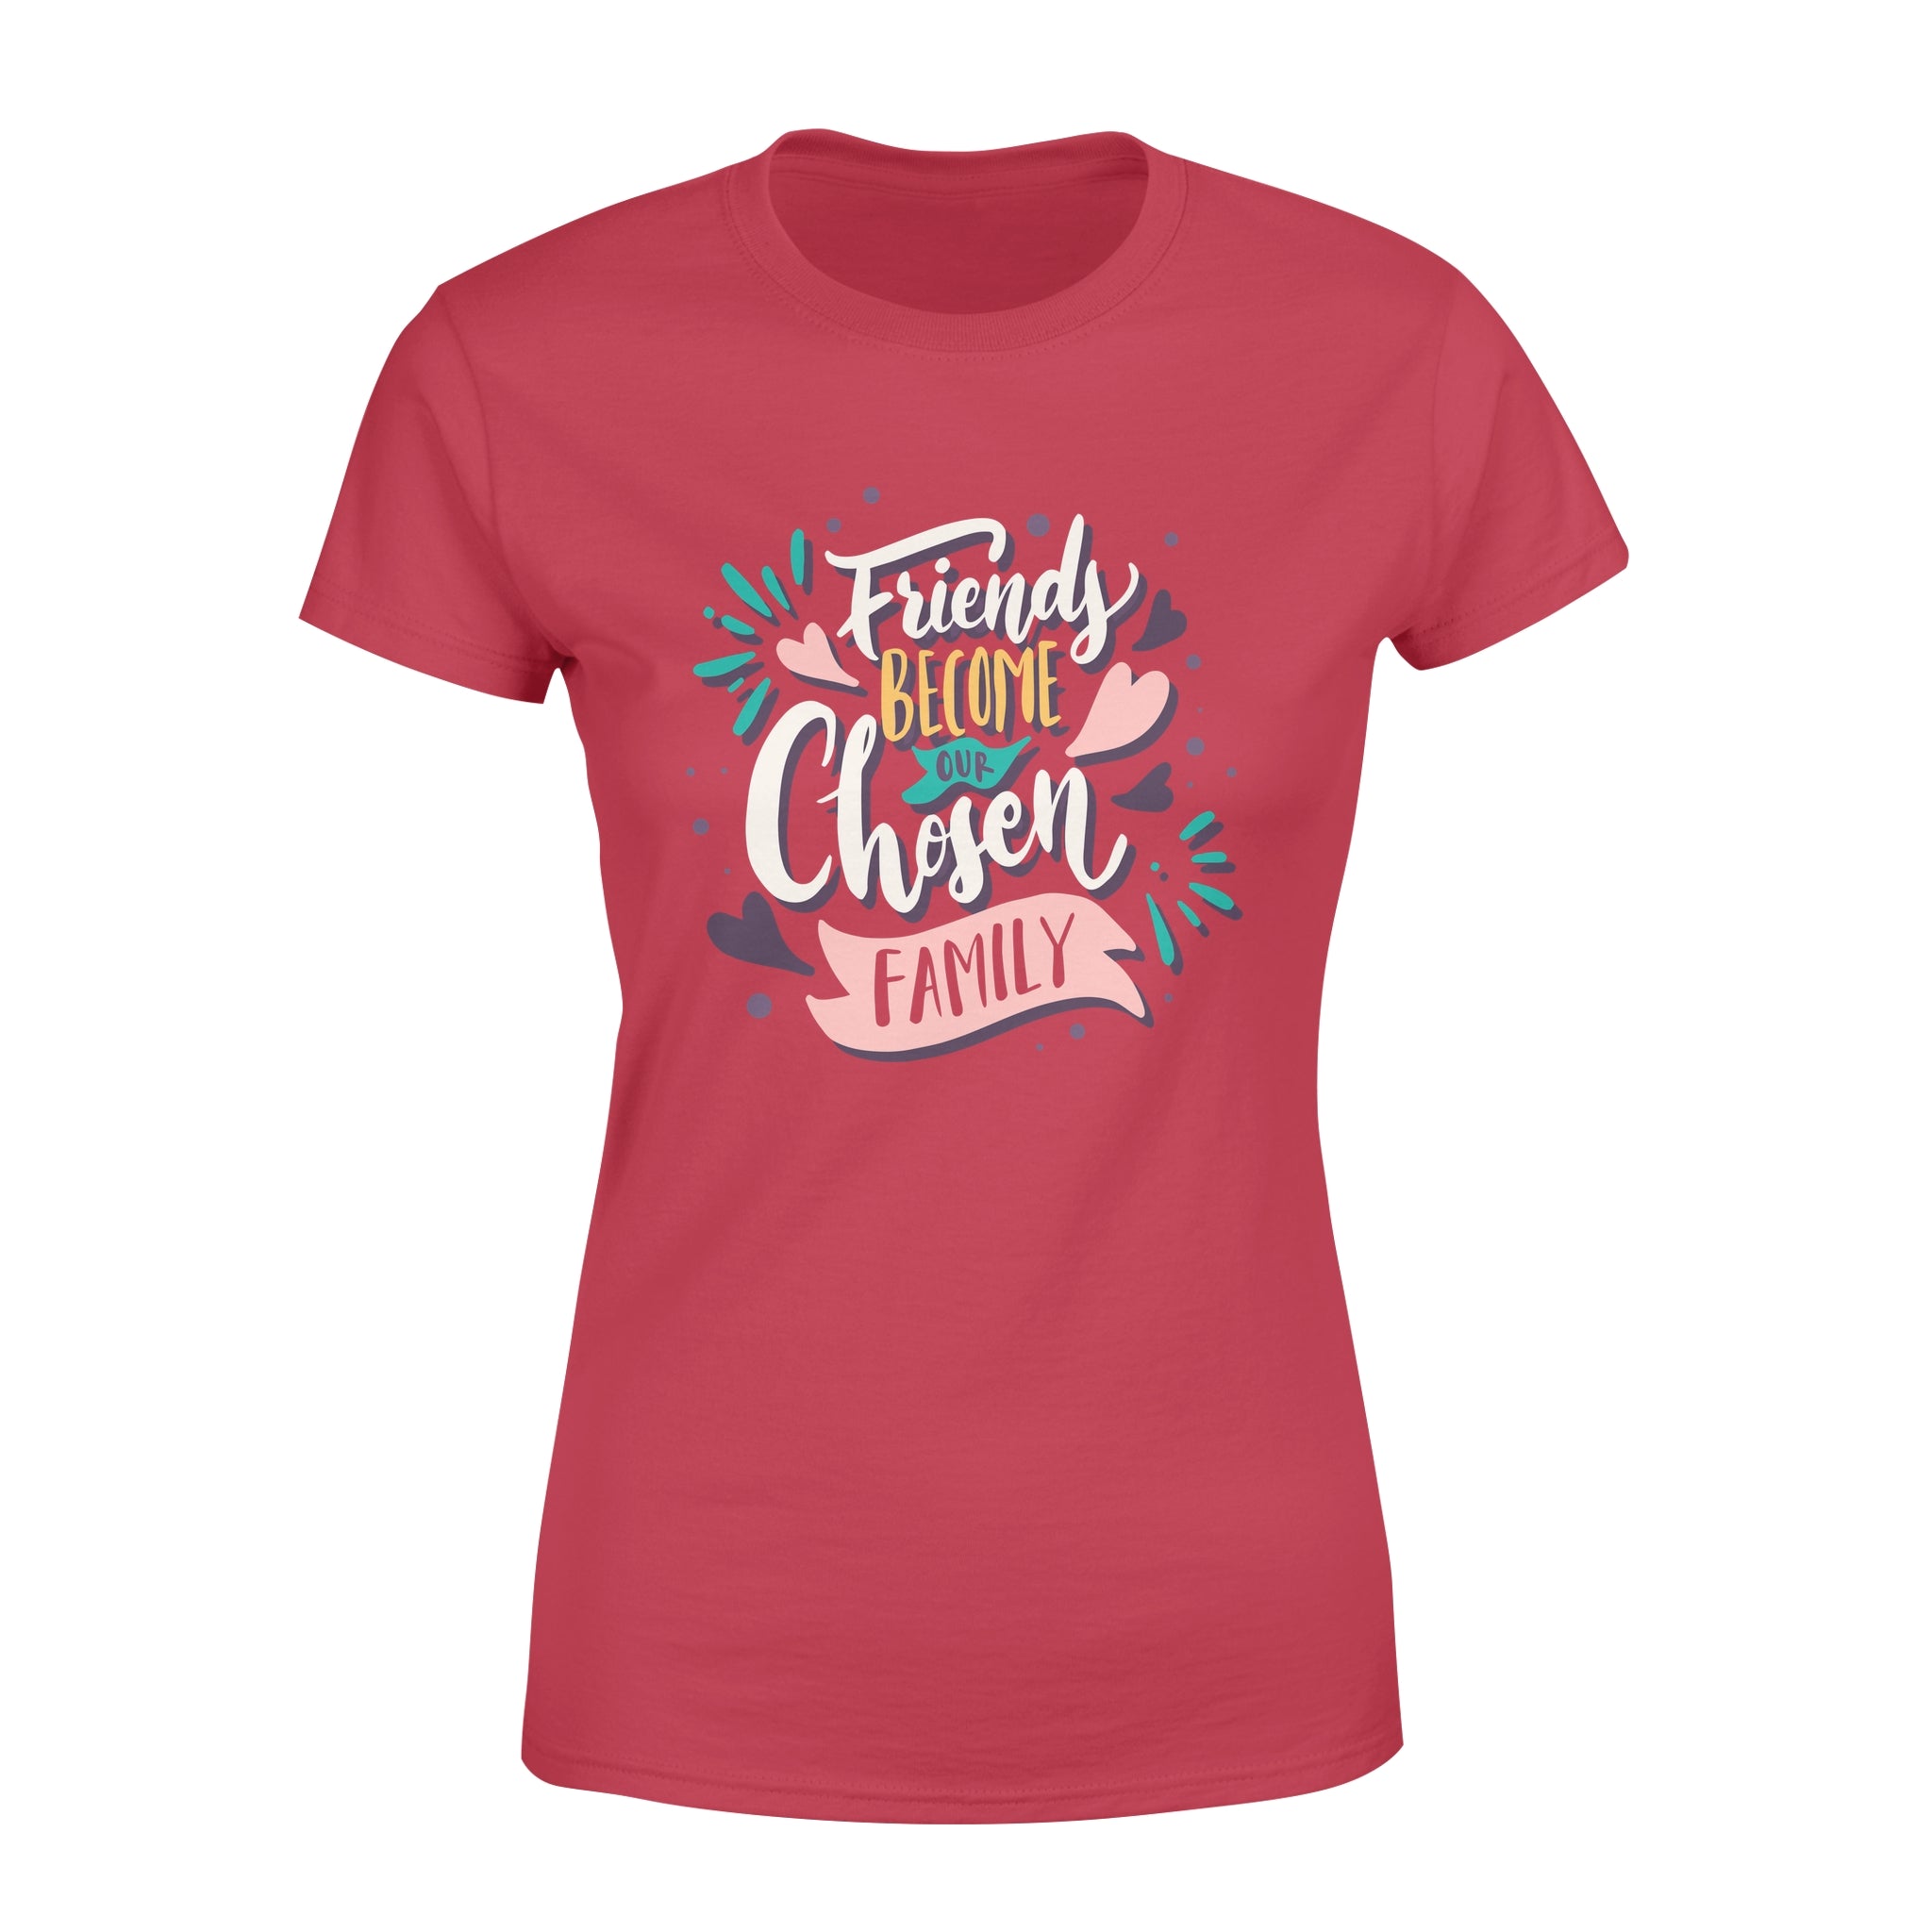 Friend Become Our Chosen Family - Women's T-shirt